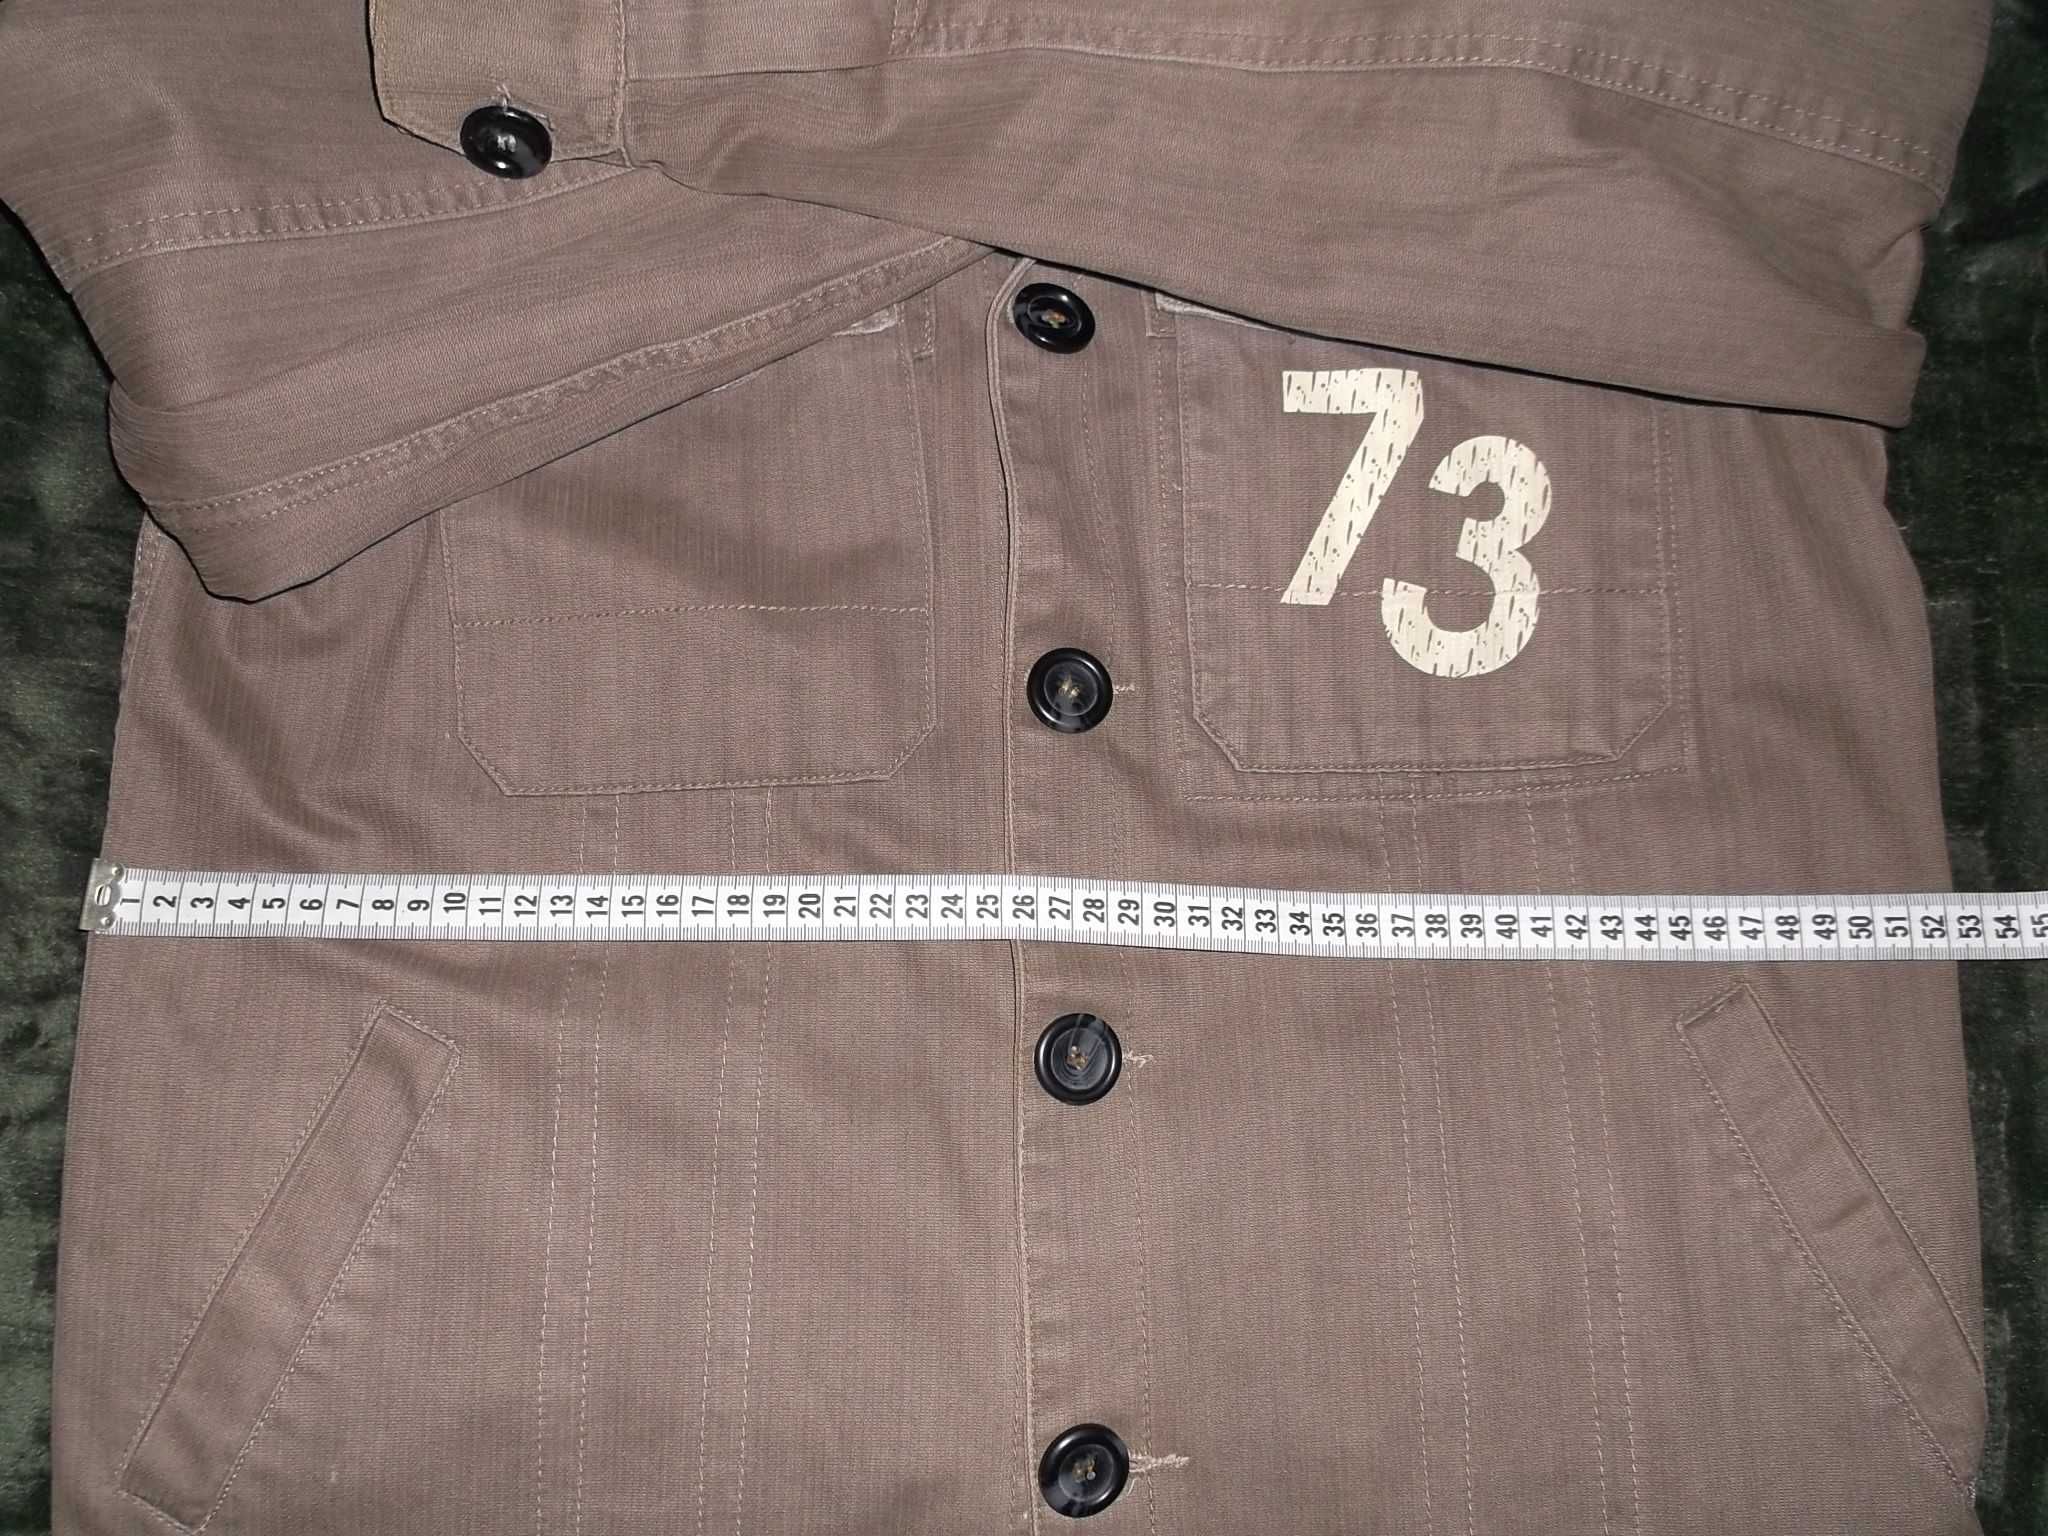 Куртка мужская (аналог джинсовой) (размер S, 46-48)